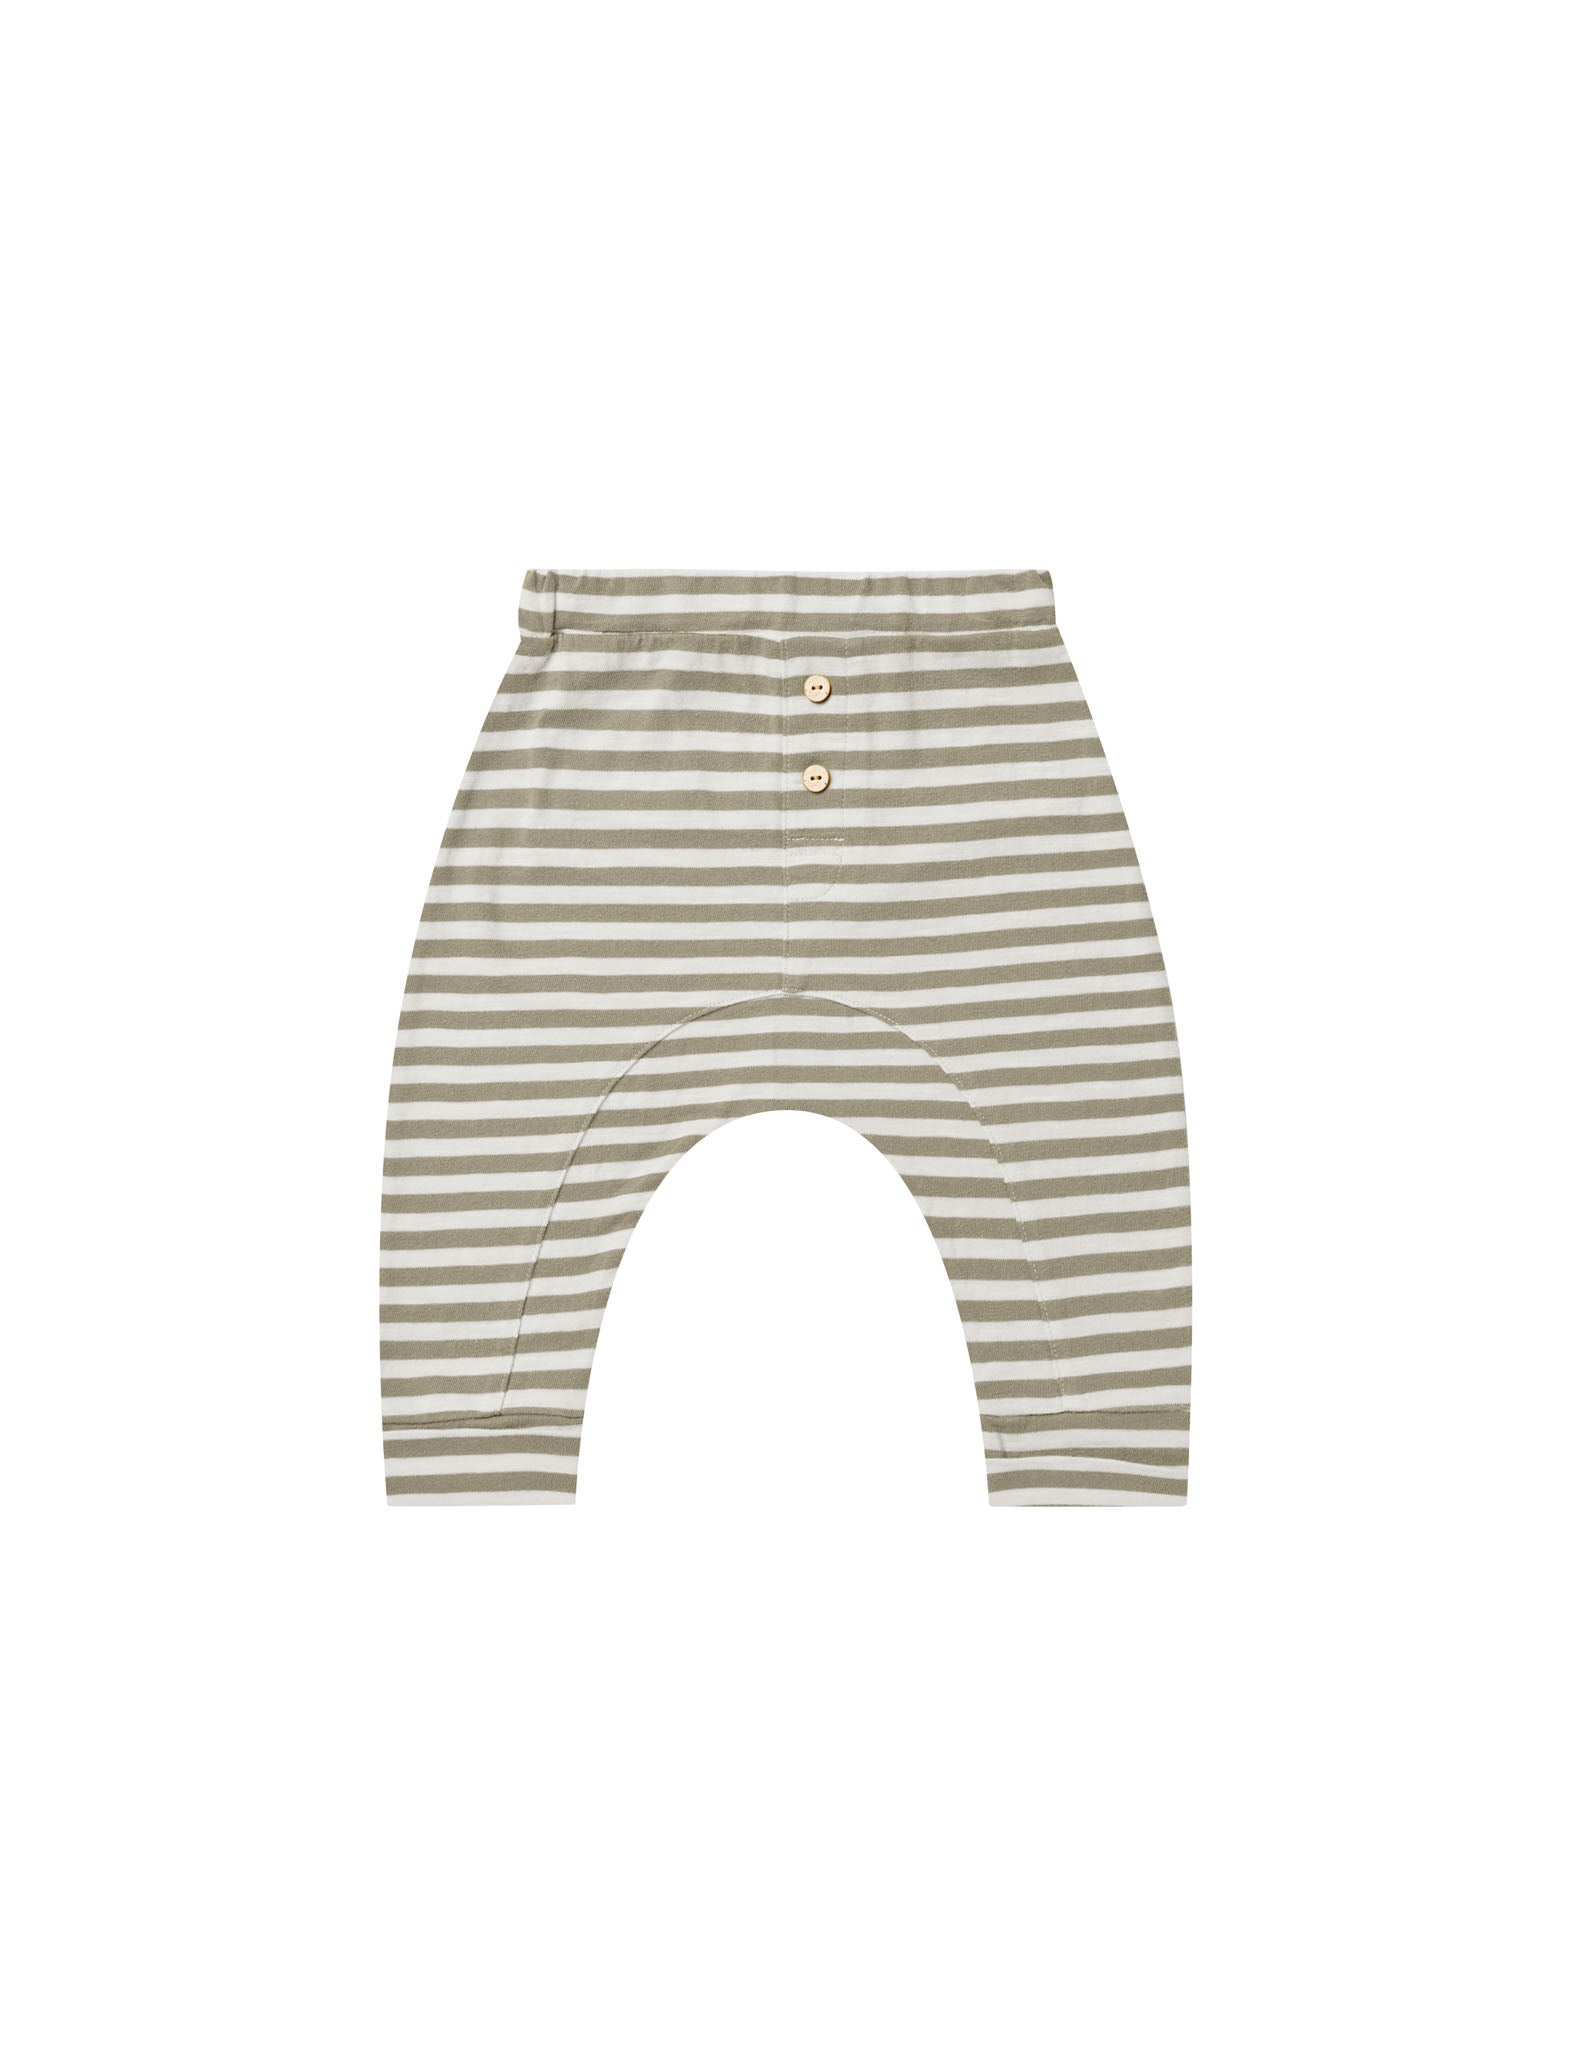 Rylee & Cru | Baby Cru Pant || Fern Stripe